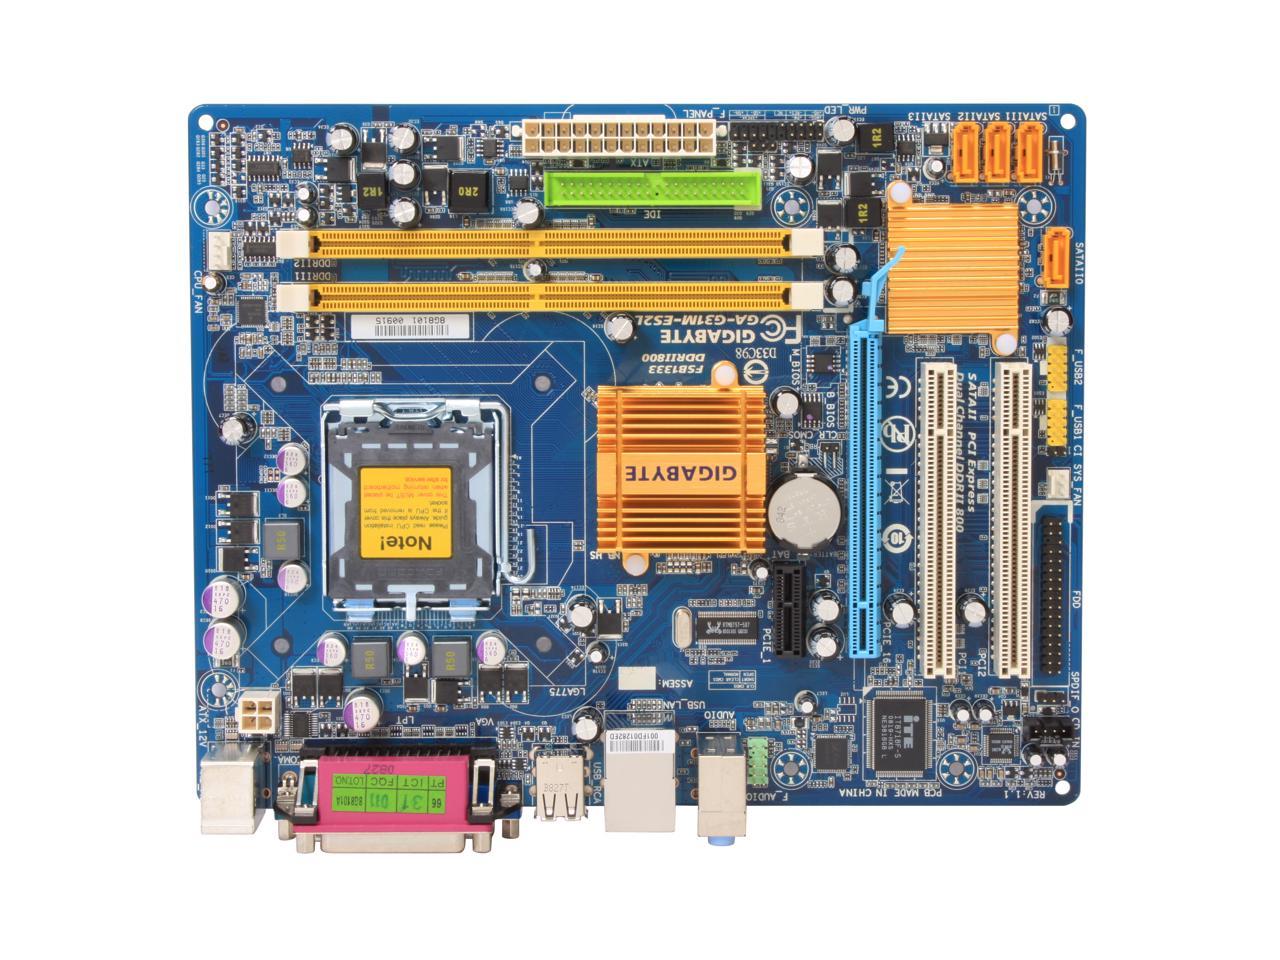 GIGABYTE GA-G31M-ES2L LGA 775 Intel G31 Micro ATX Intel Motherboard